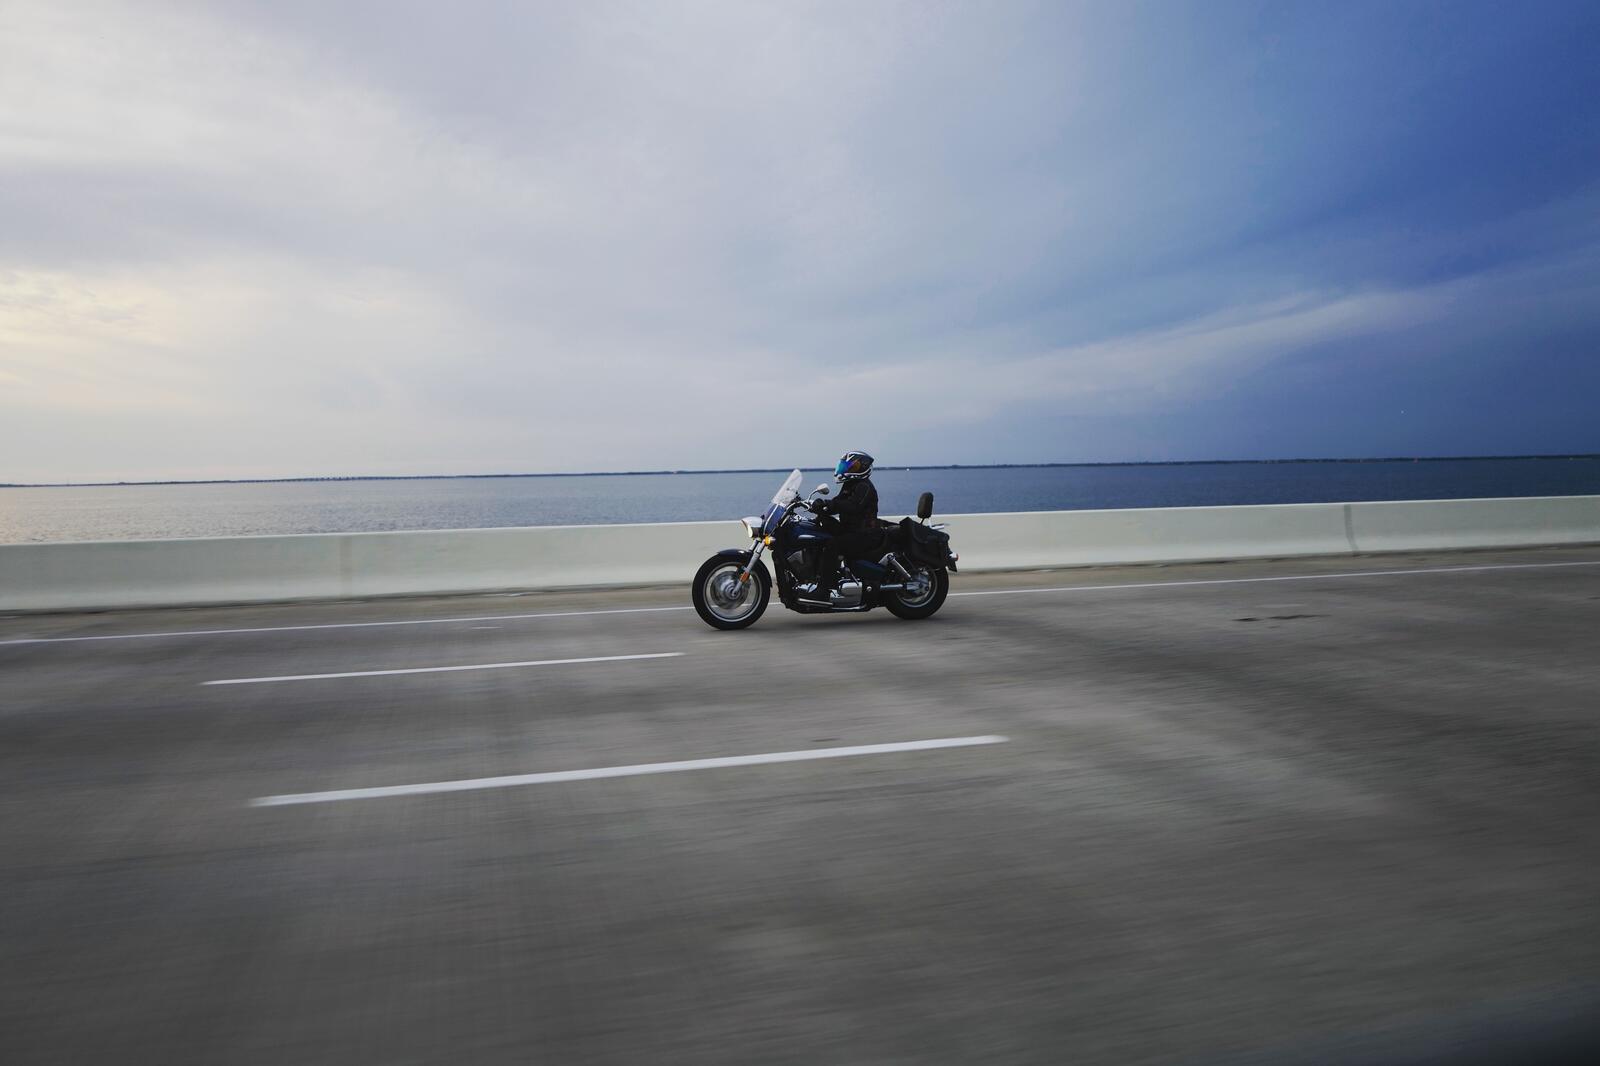 Бесплатное фото Мотоциклист на фоне моря